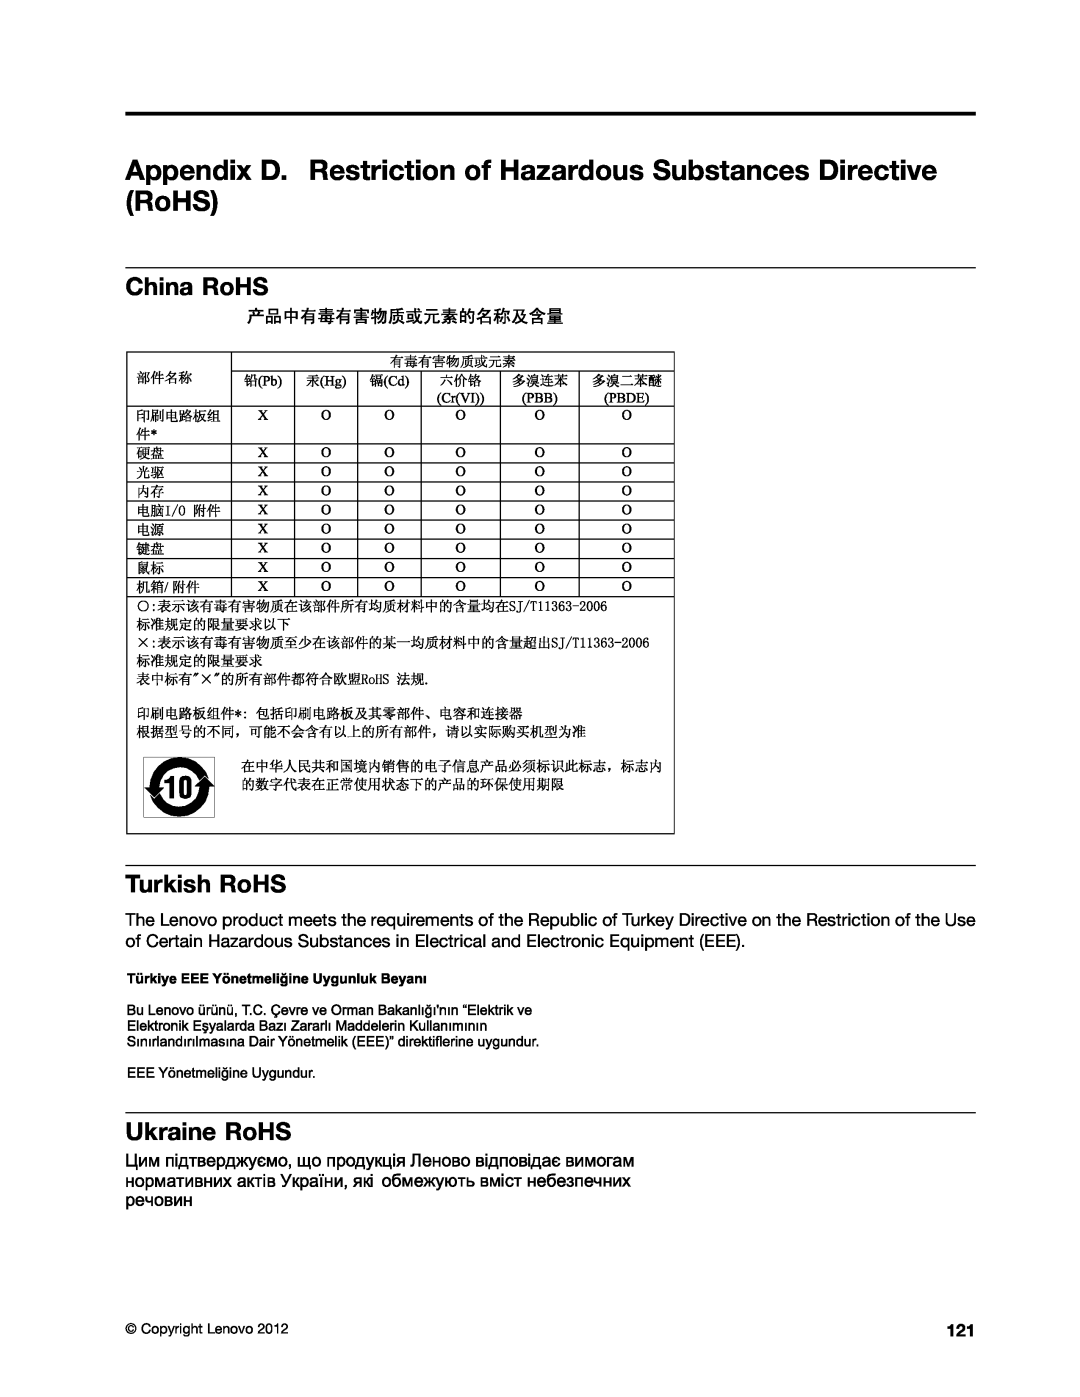 Lenovo 3484JMU manual Appendix D. Restriction of Hazardous Substances Directive RoHS, China RoHS Turkish RoHS, Ukraine RoHS 